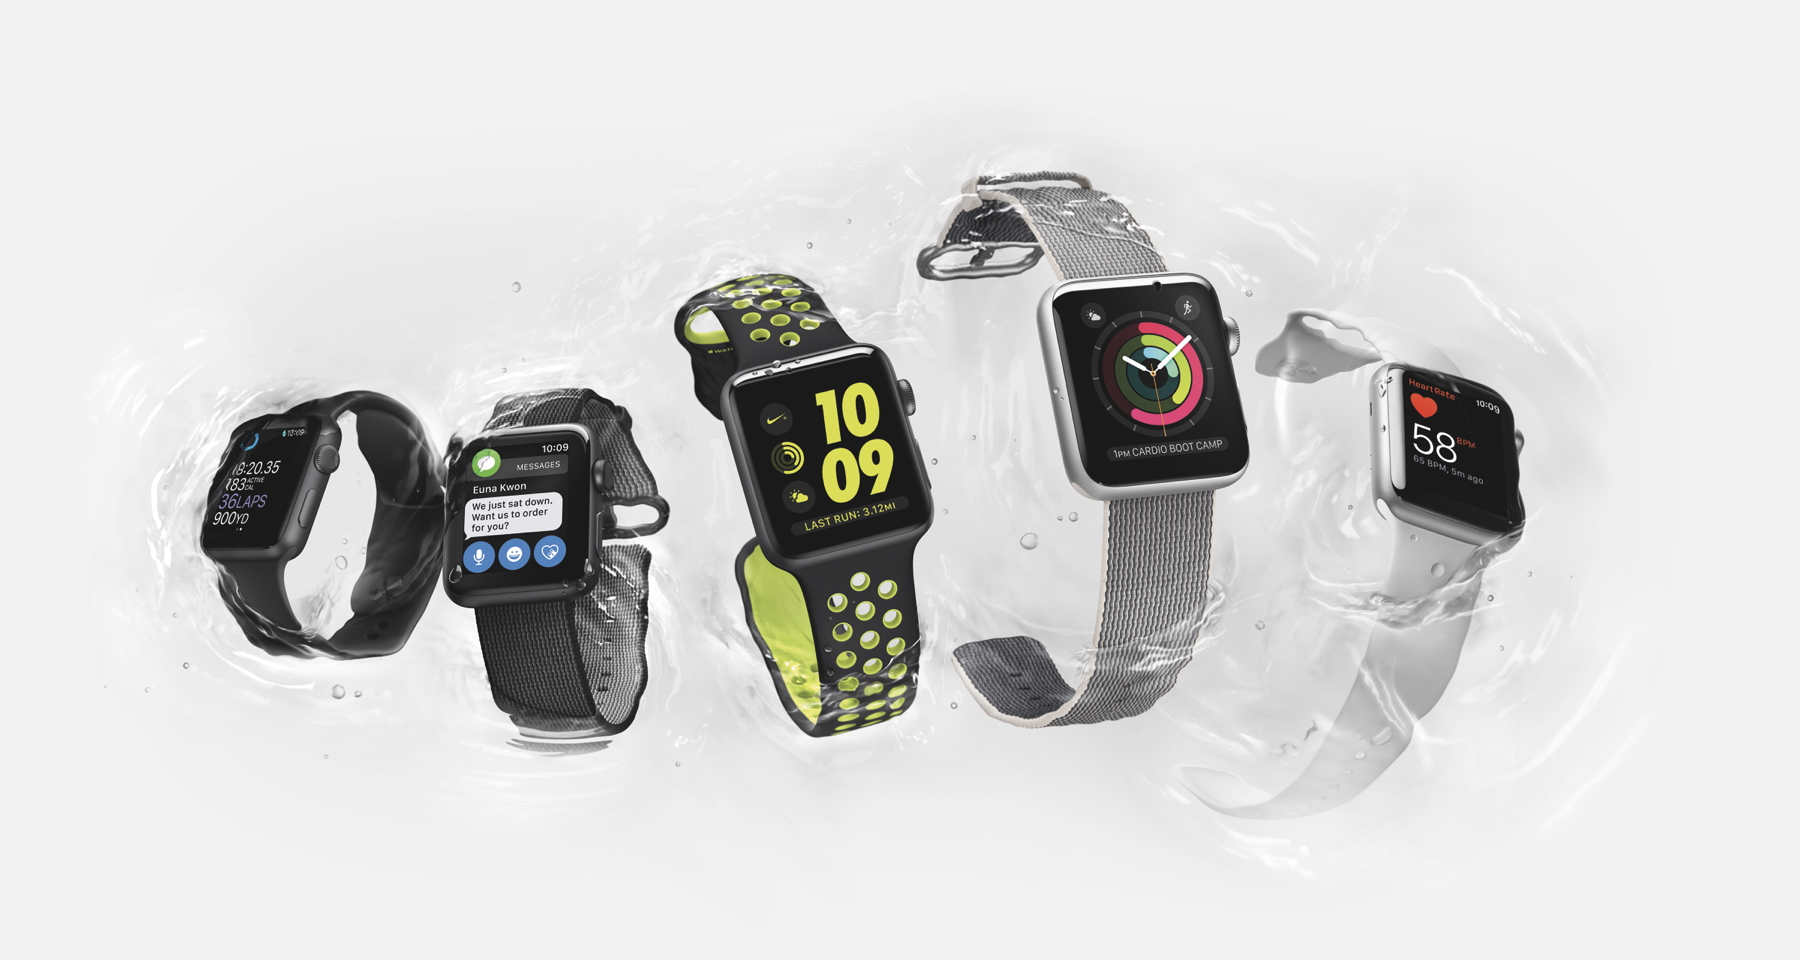 Apple Watch 2 versions